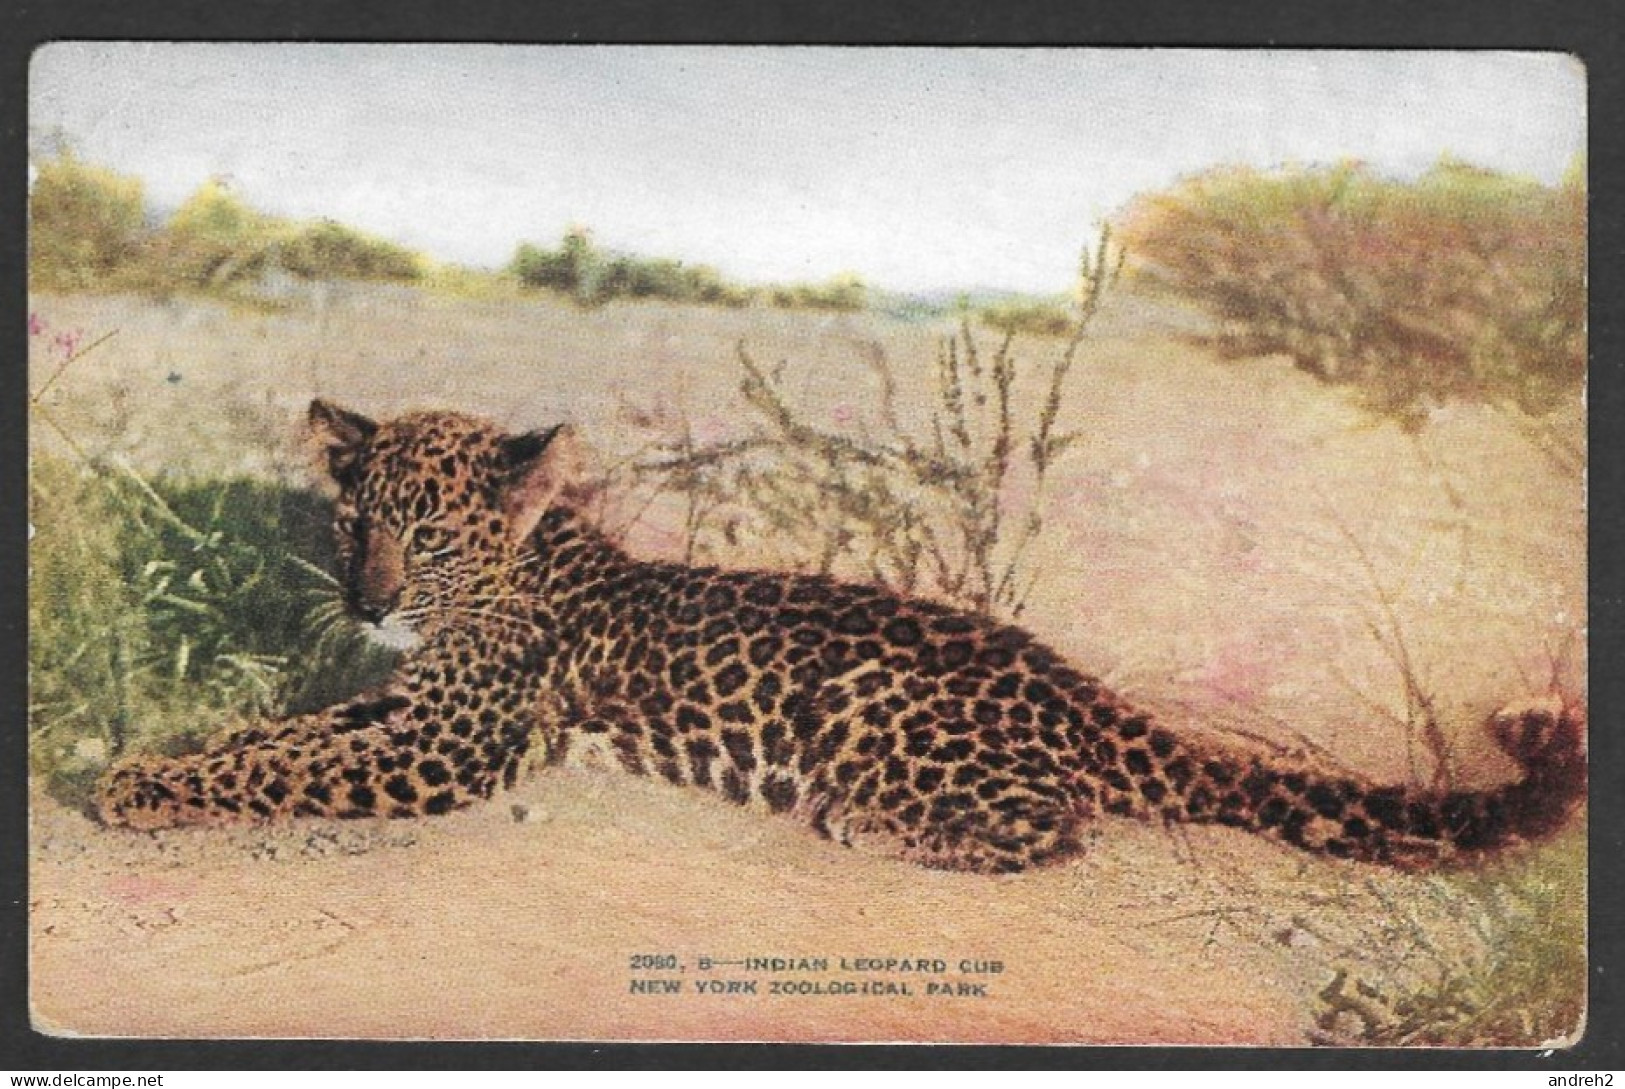 Animal & Faune > Tigres - No: 2080,B - Indian Leopard Cub - New York Zoological Park - Zoo - Tigres